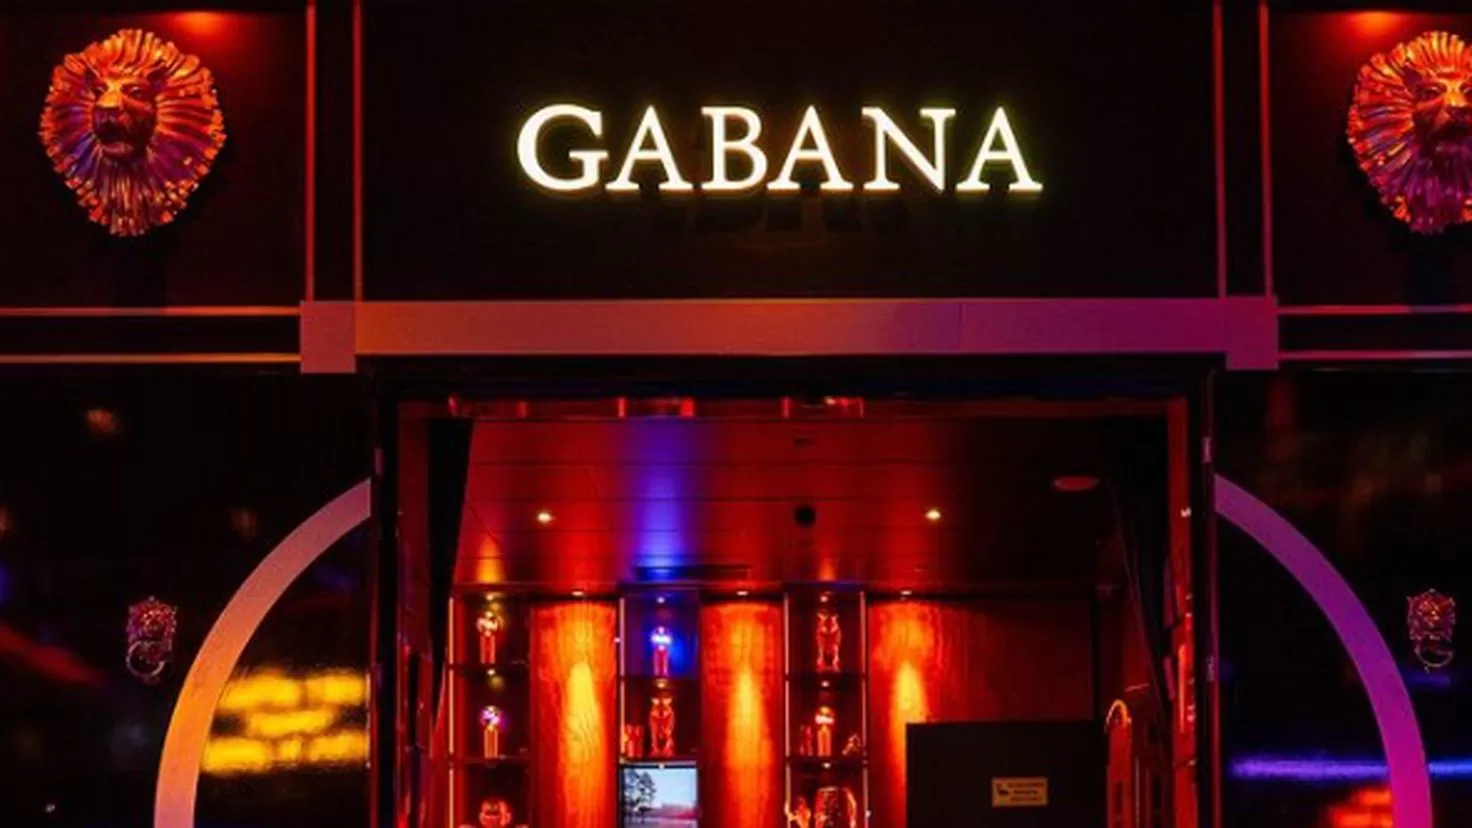 Tito Pajares, partner of Sofa Mazagatos, reopens the Gabana nightclub
